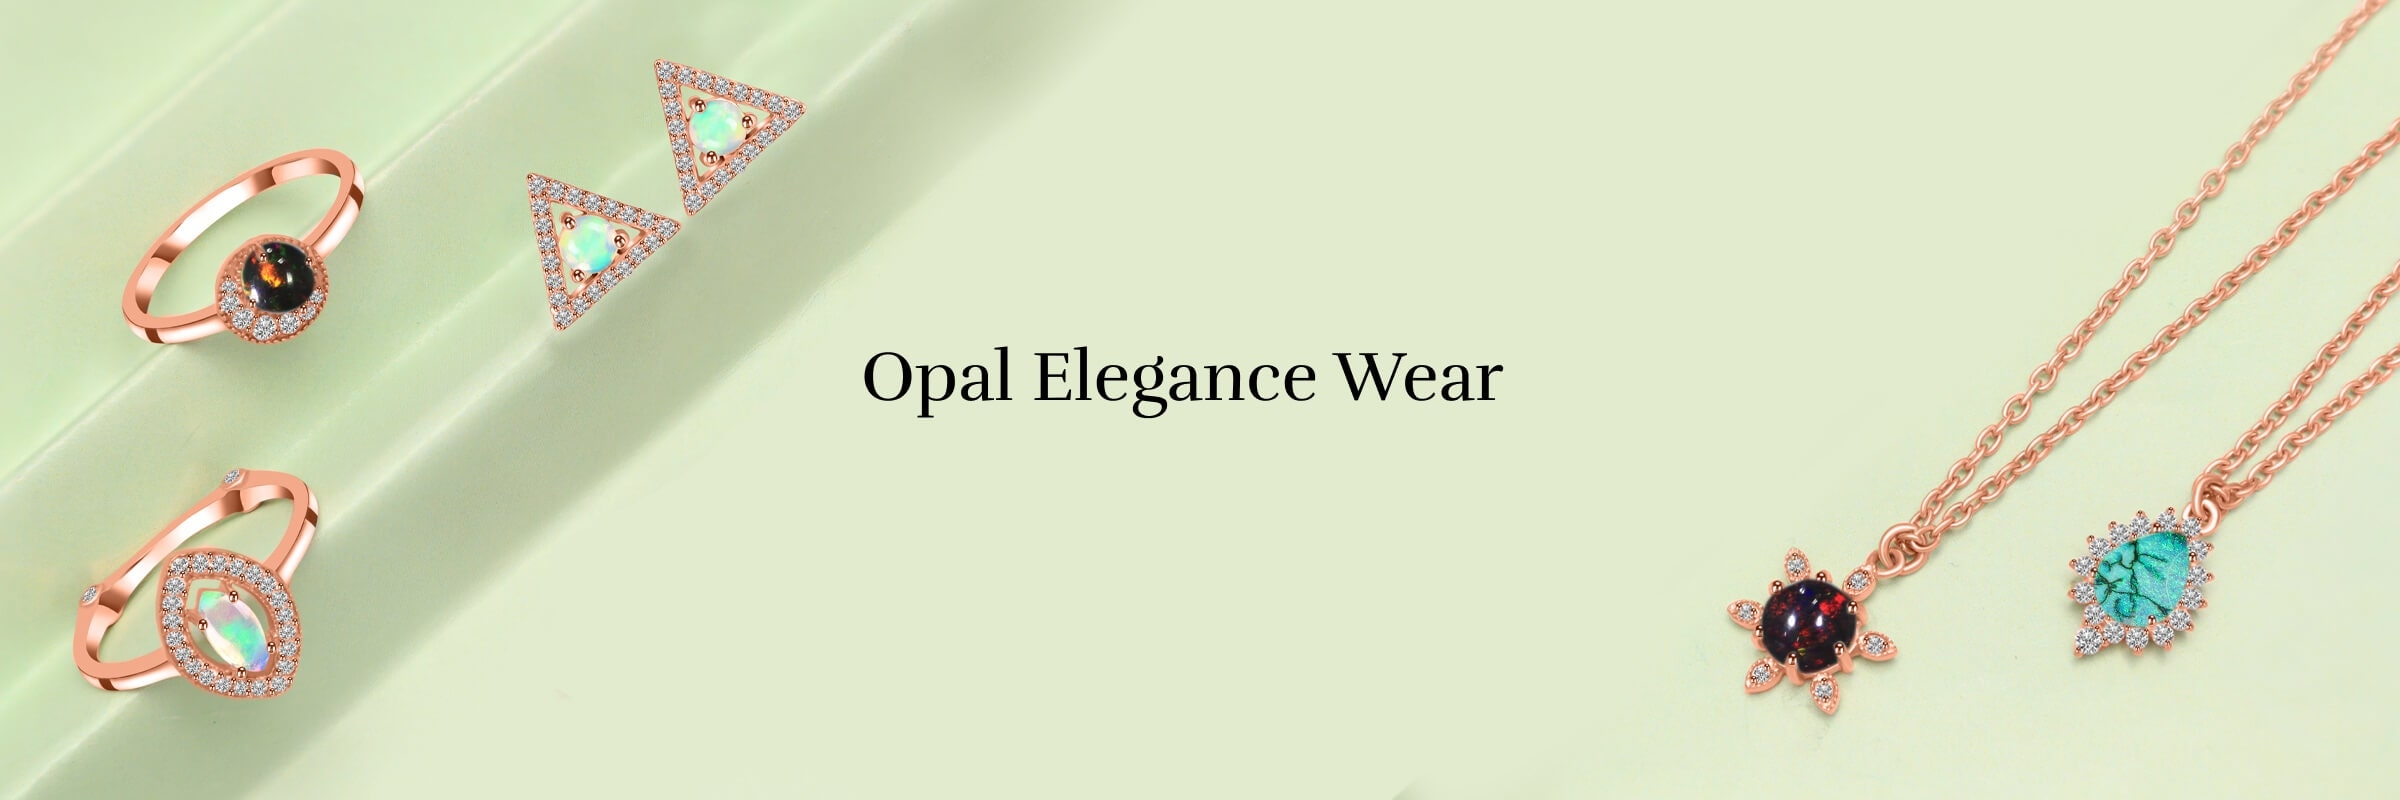 How to Wear Opal Jewelry